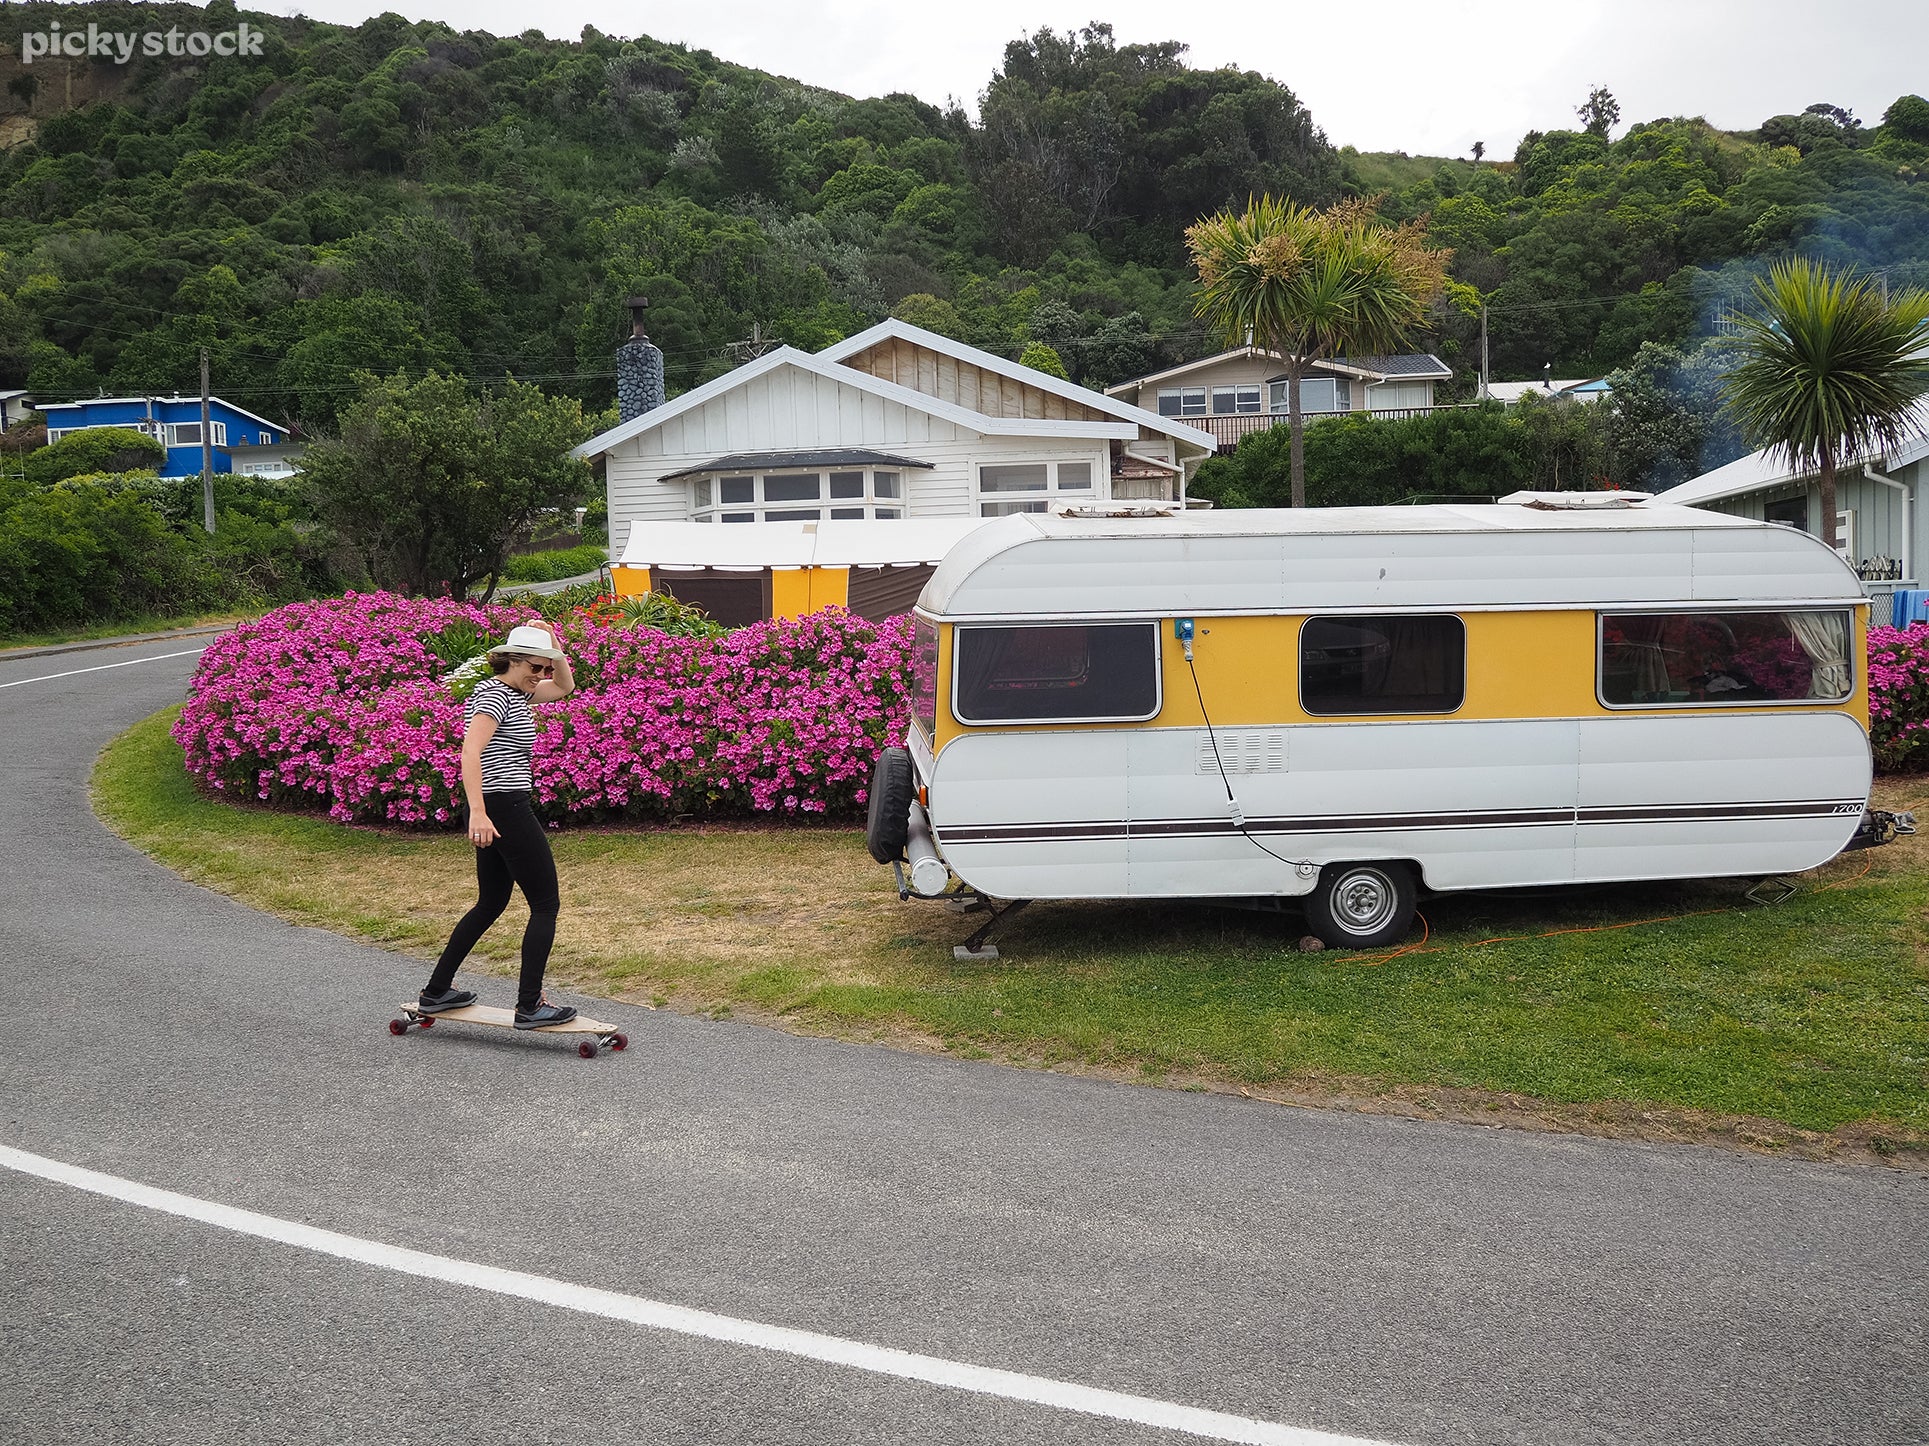 Guy longboarding on rural street. Passing caravan with yellow markers. 